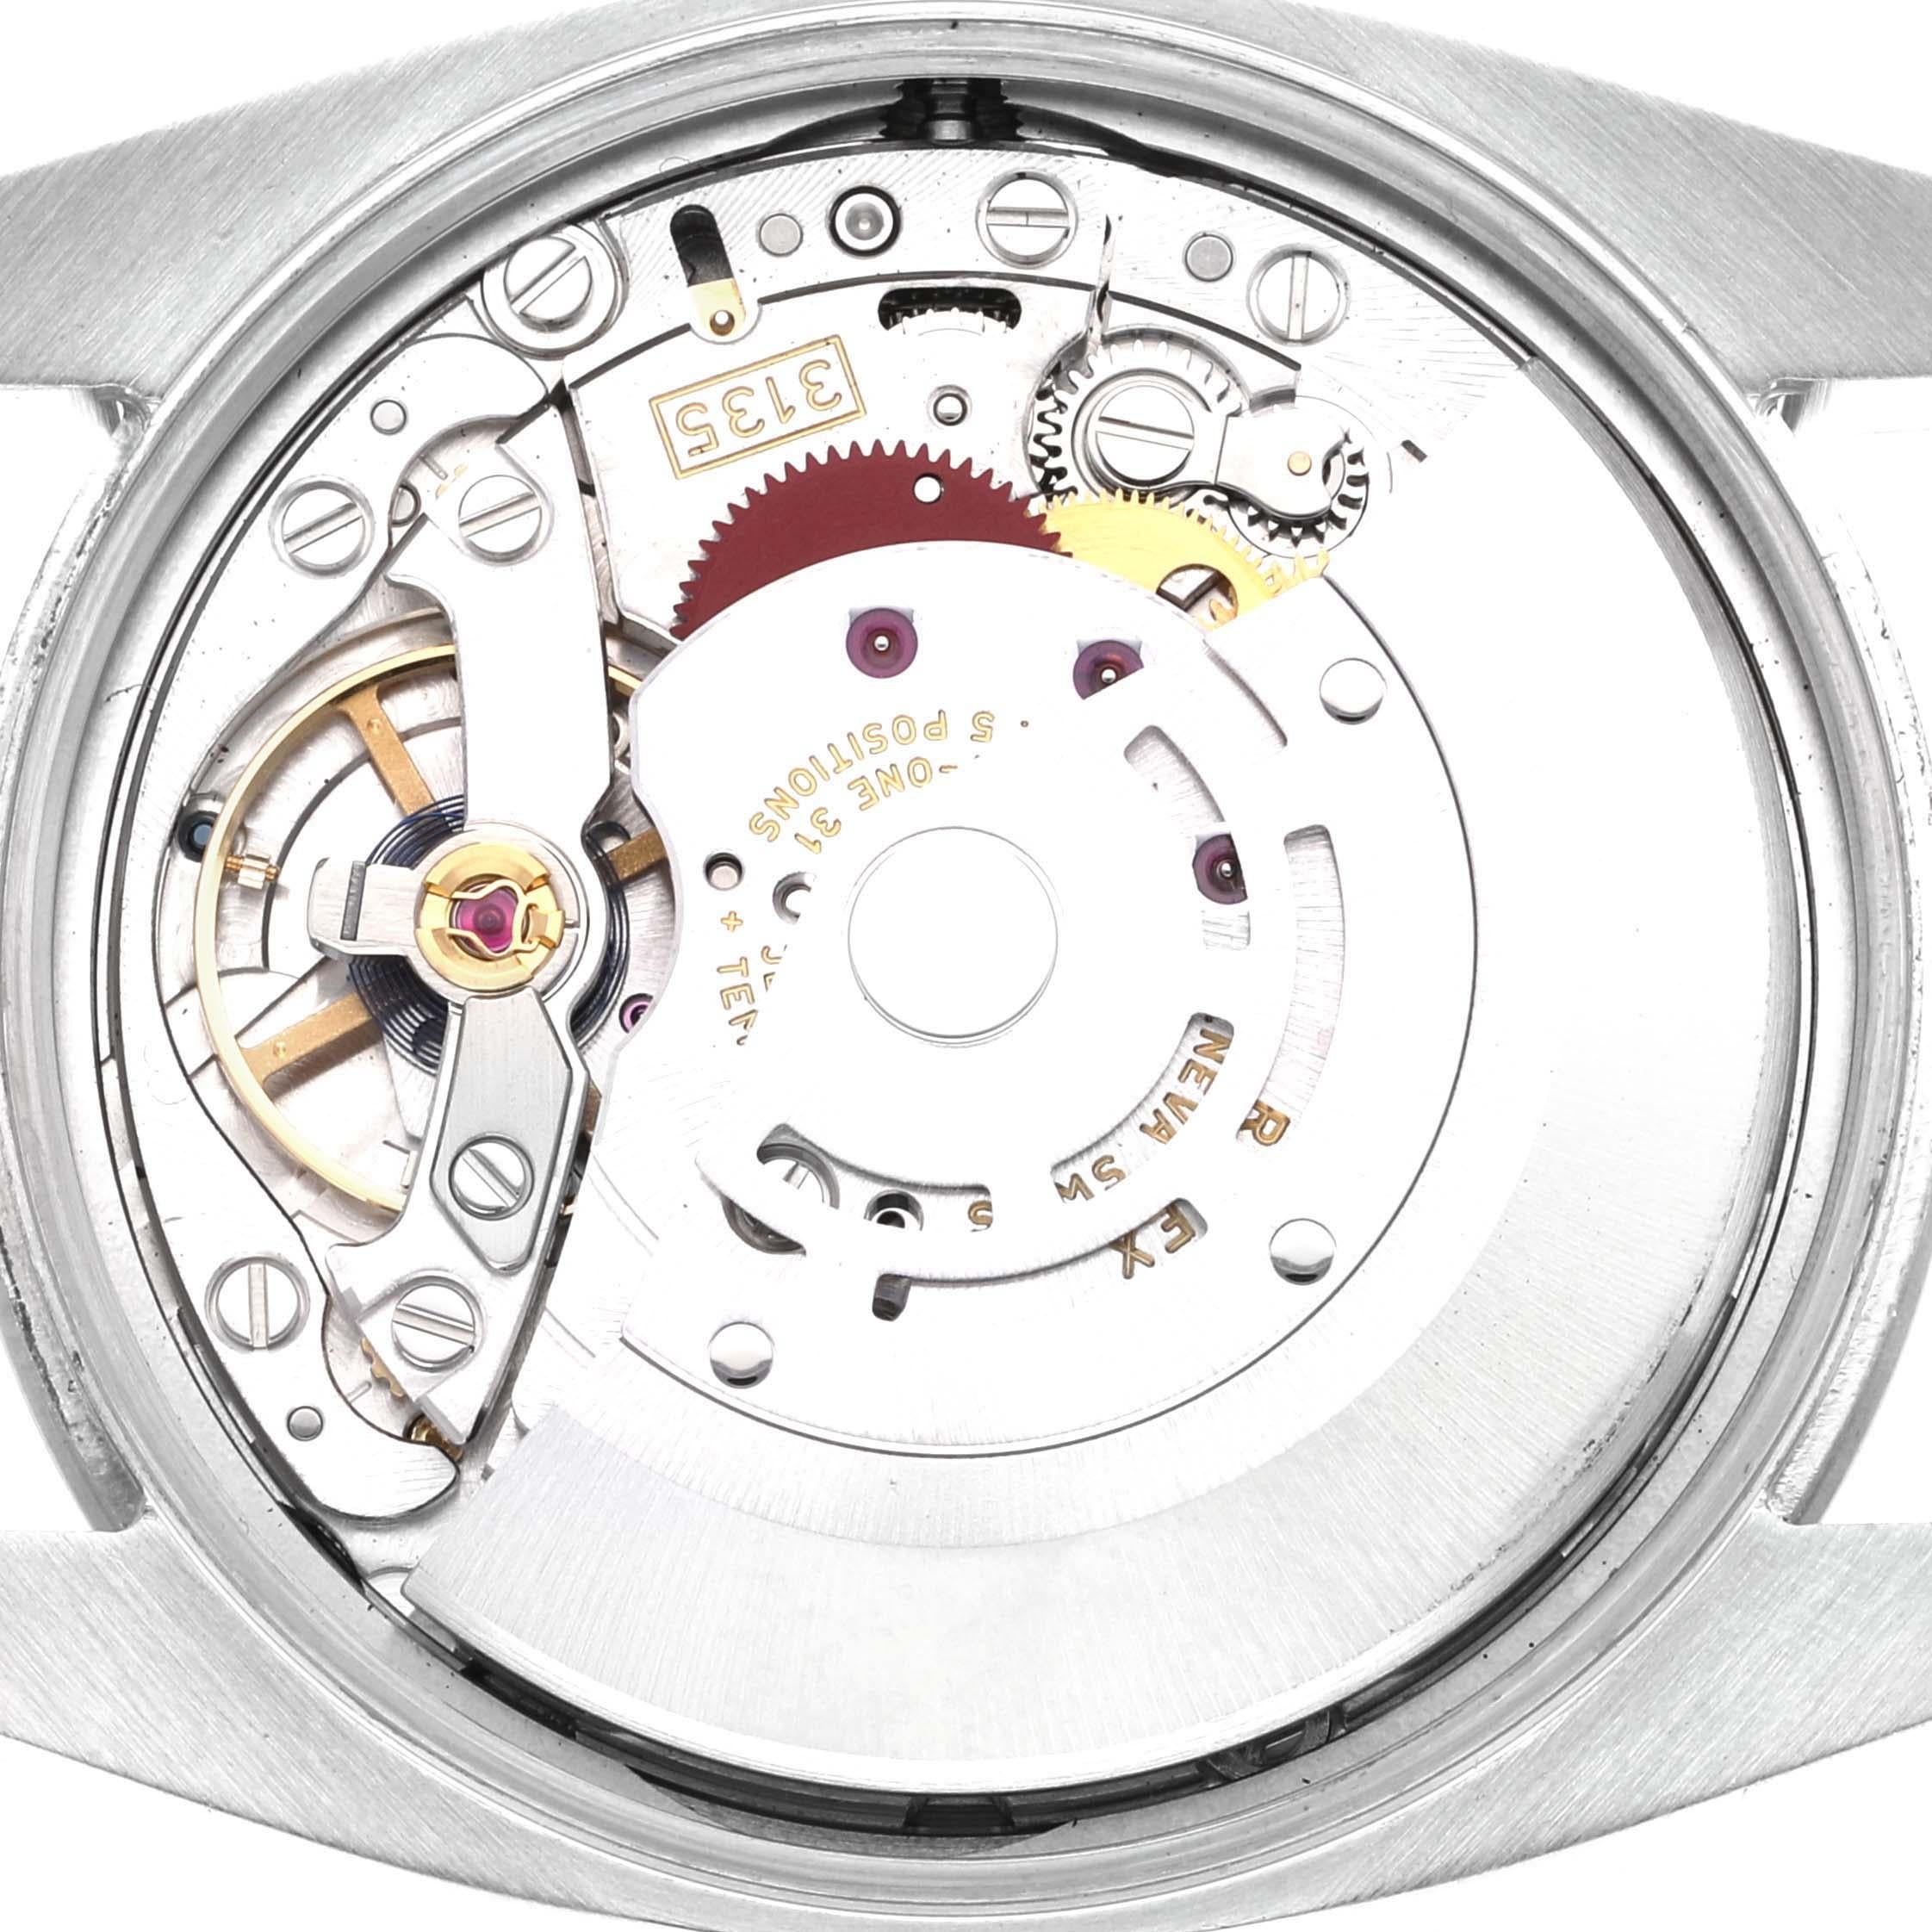 Rolex Date Acero Inoxidable Esfera Azul Reloj Caballero 115200 Caja Tarjeta en venta 4